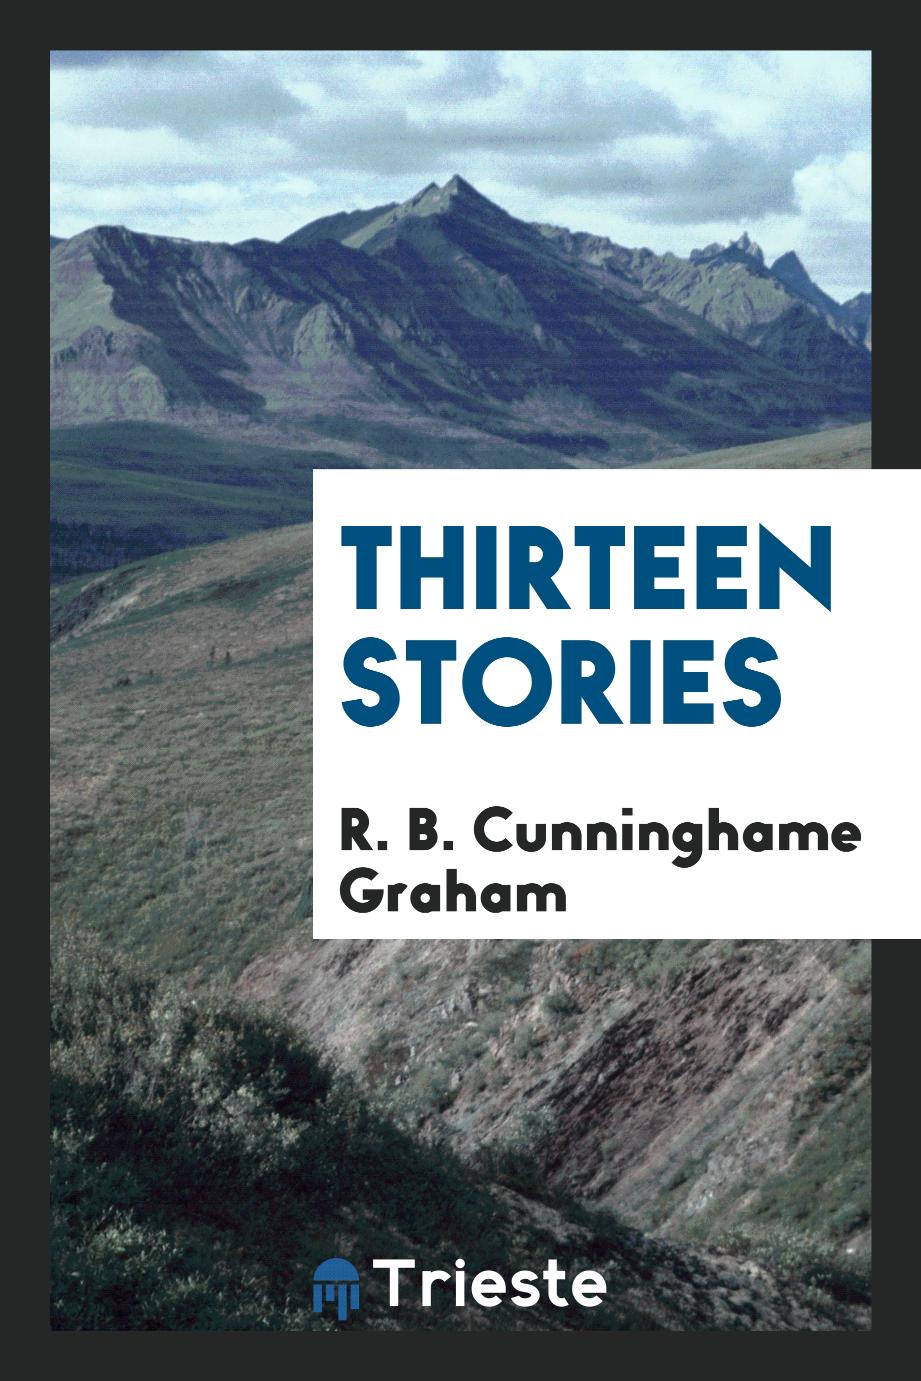 Thirteen Stories